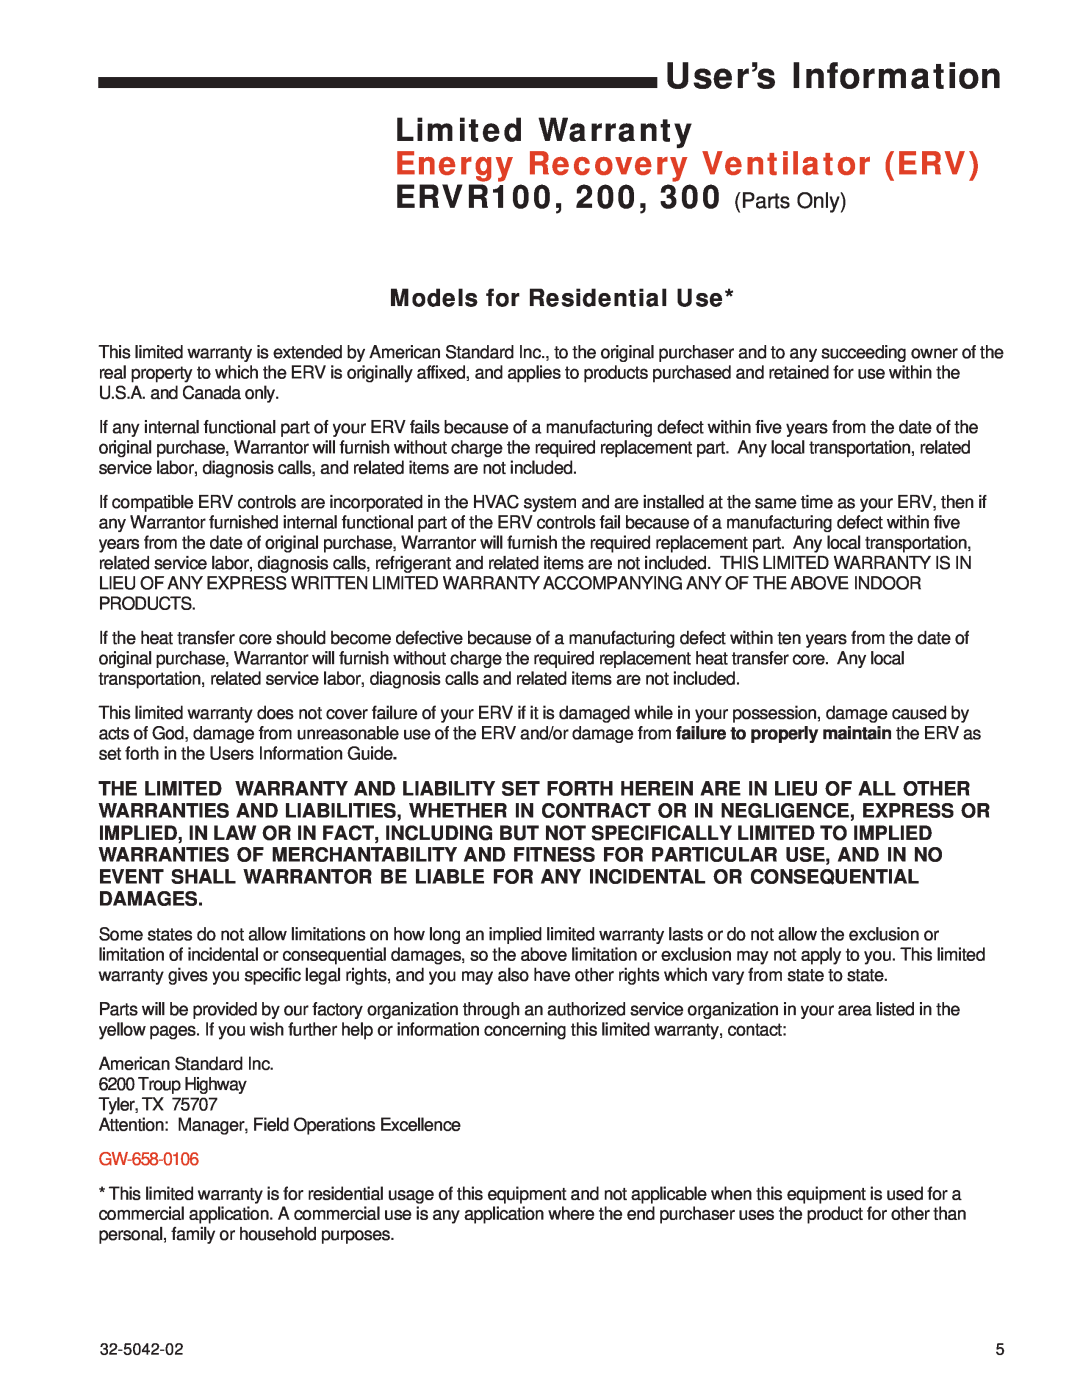 American Standard ERVR100A9P00A manual Limited Warranty, Energy Recovery Ventilator ERV, ERVR100, 200, 300 Parts Only 